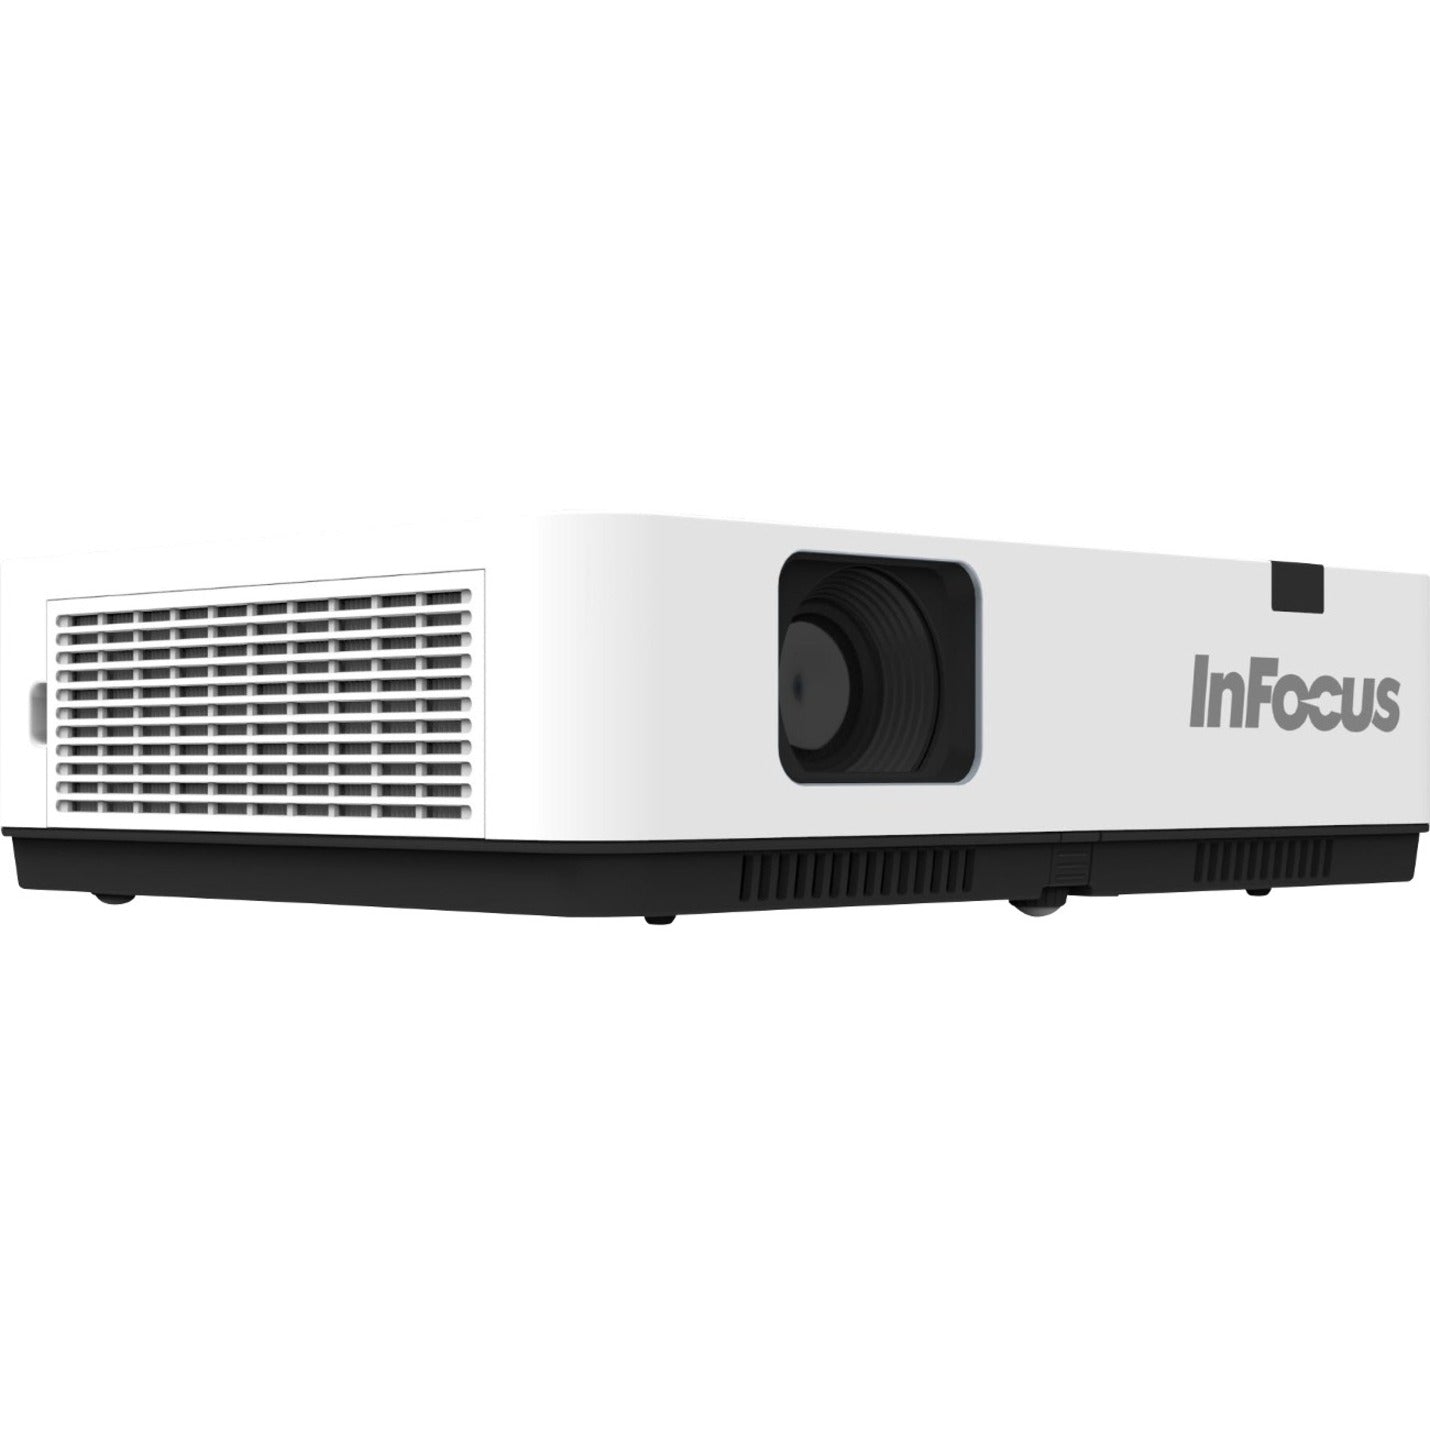 InFocus Advanced IN1004 3LCD Projector - XGA, 3100 lm, 4:3 Aspect Ratio [Discontinued]